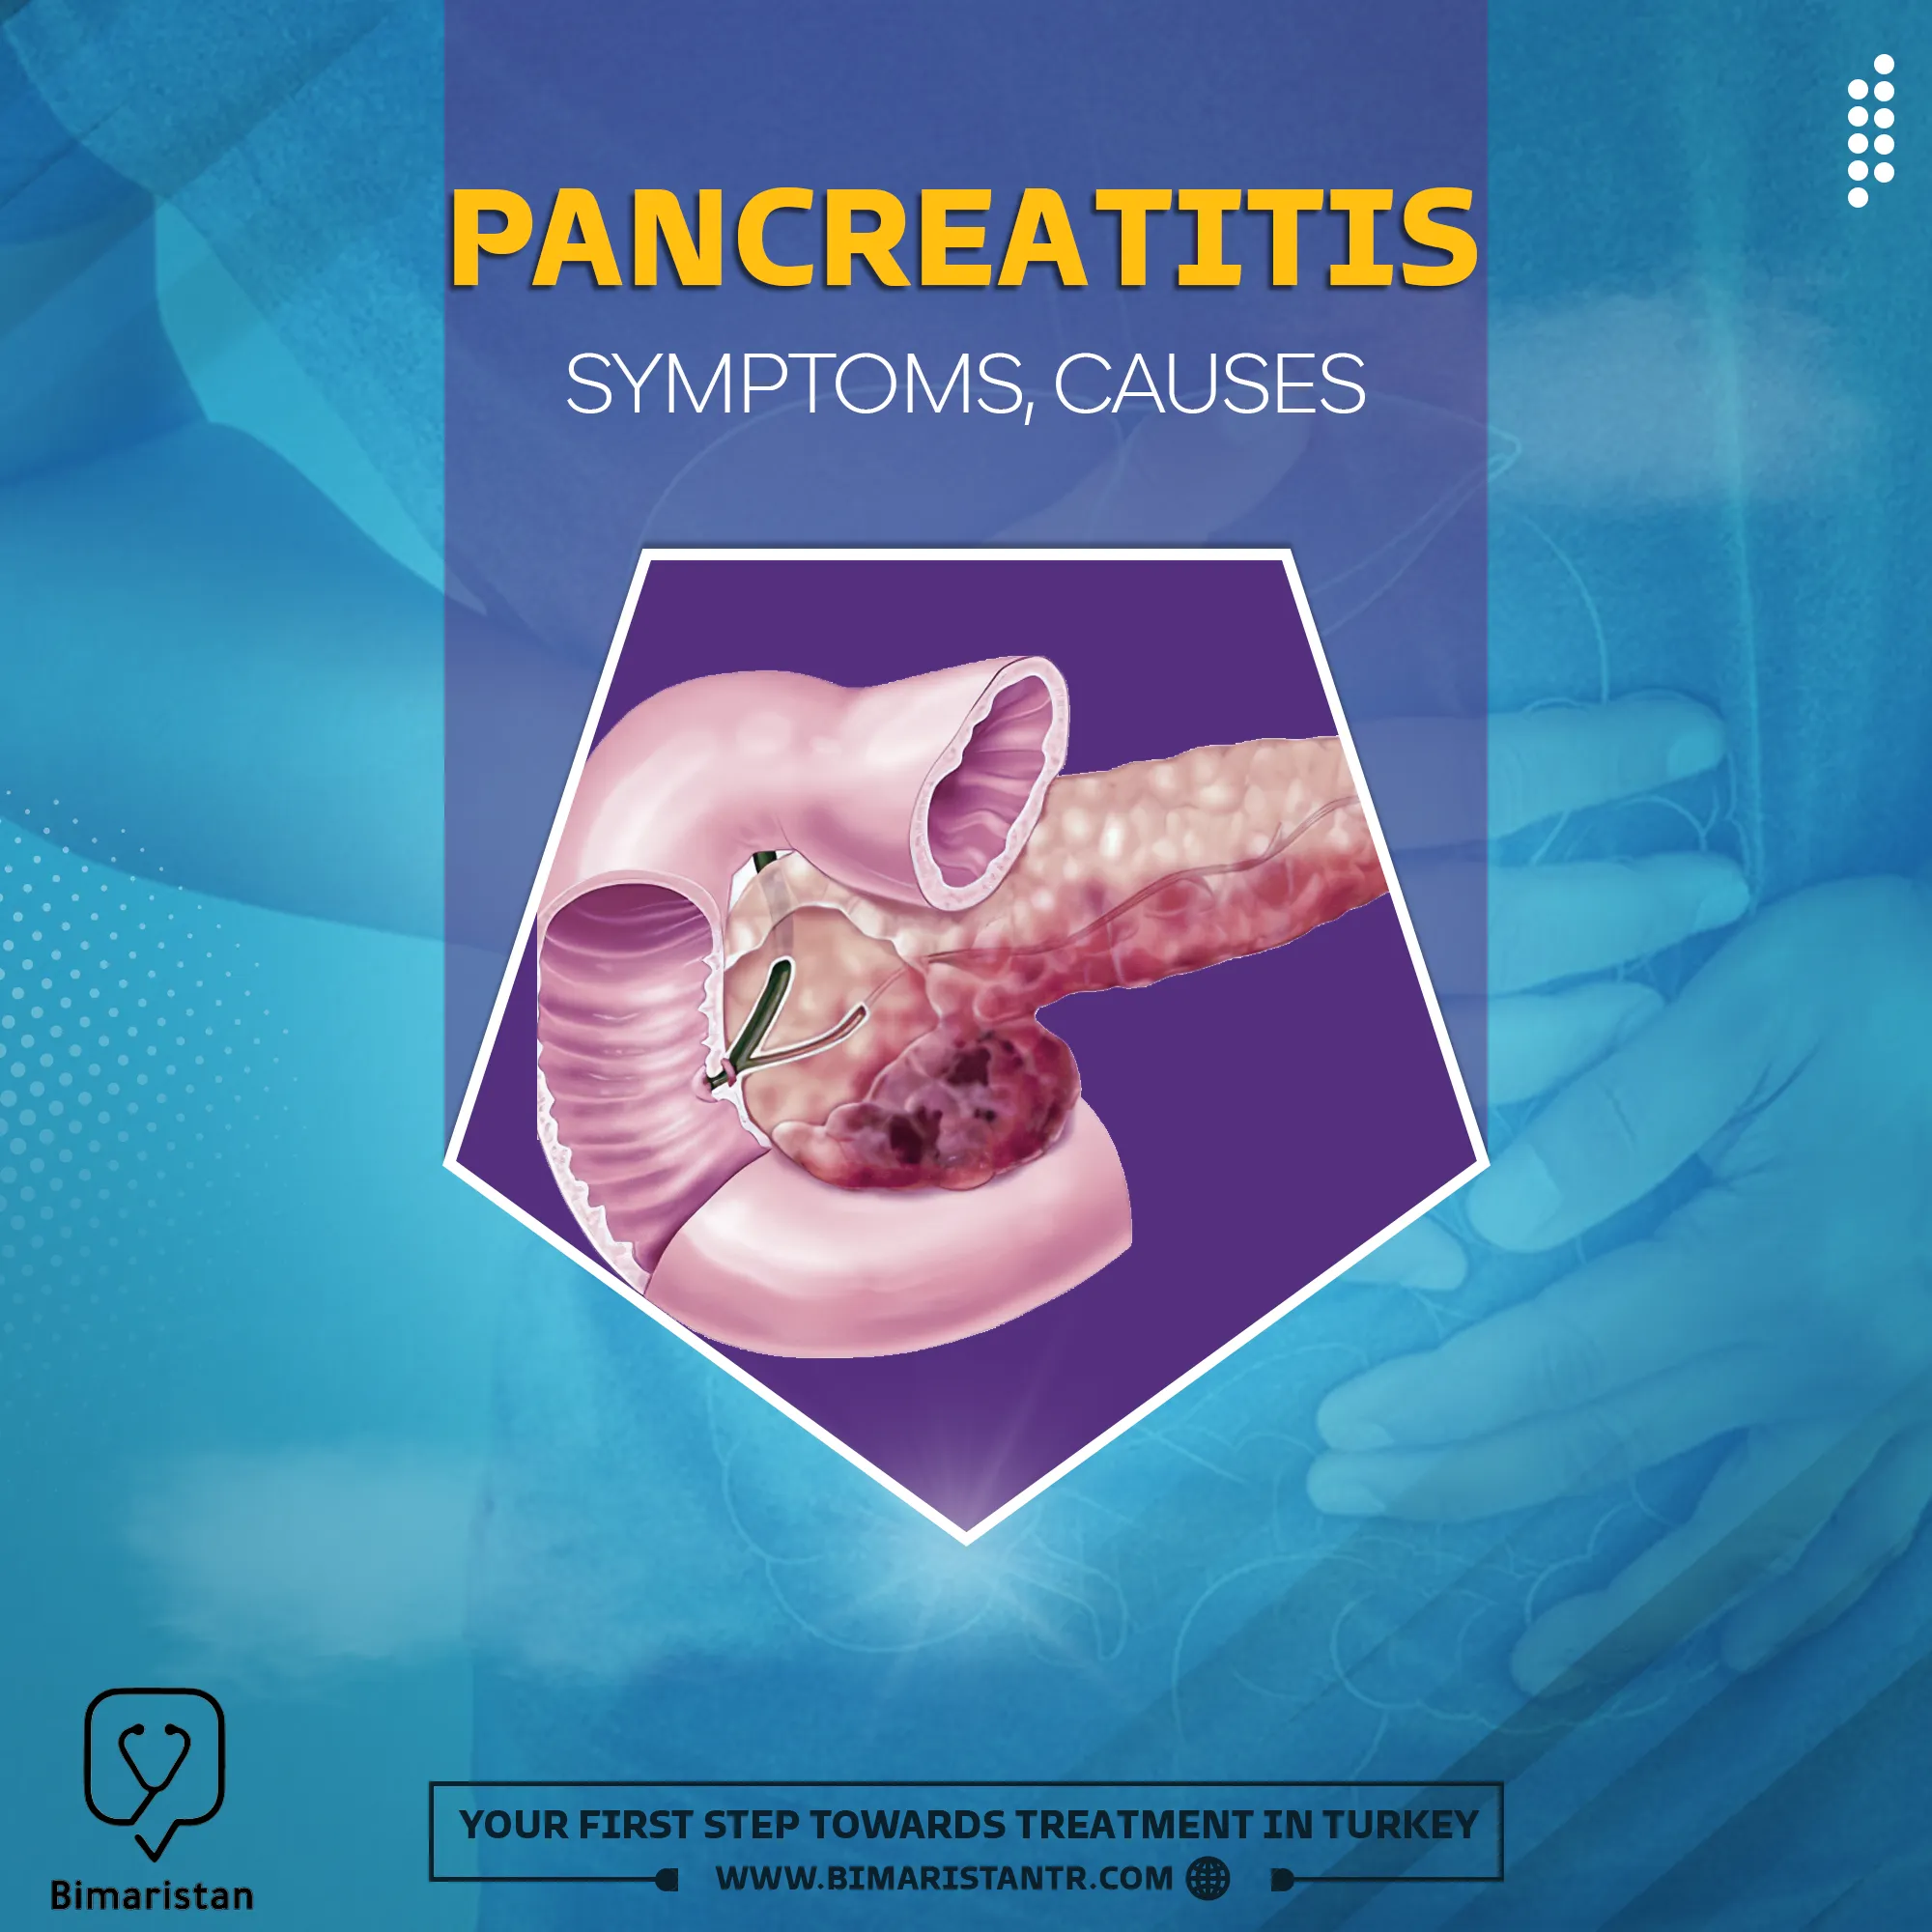 Symptoms and causes of pancreatitis